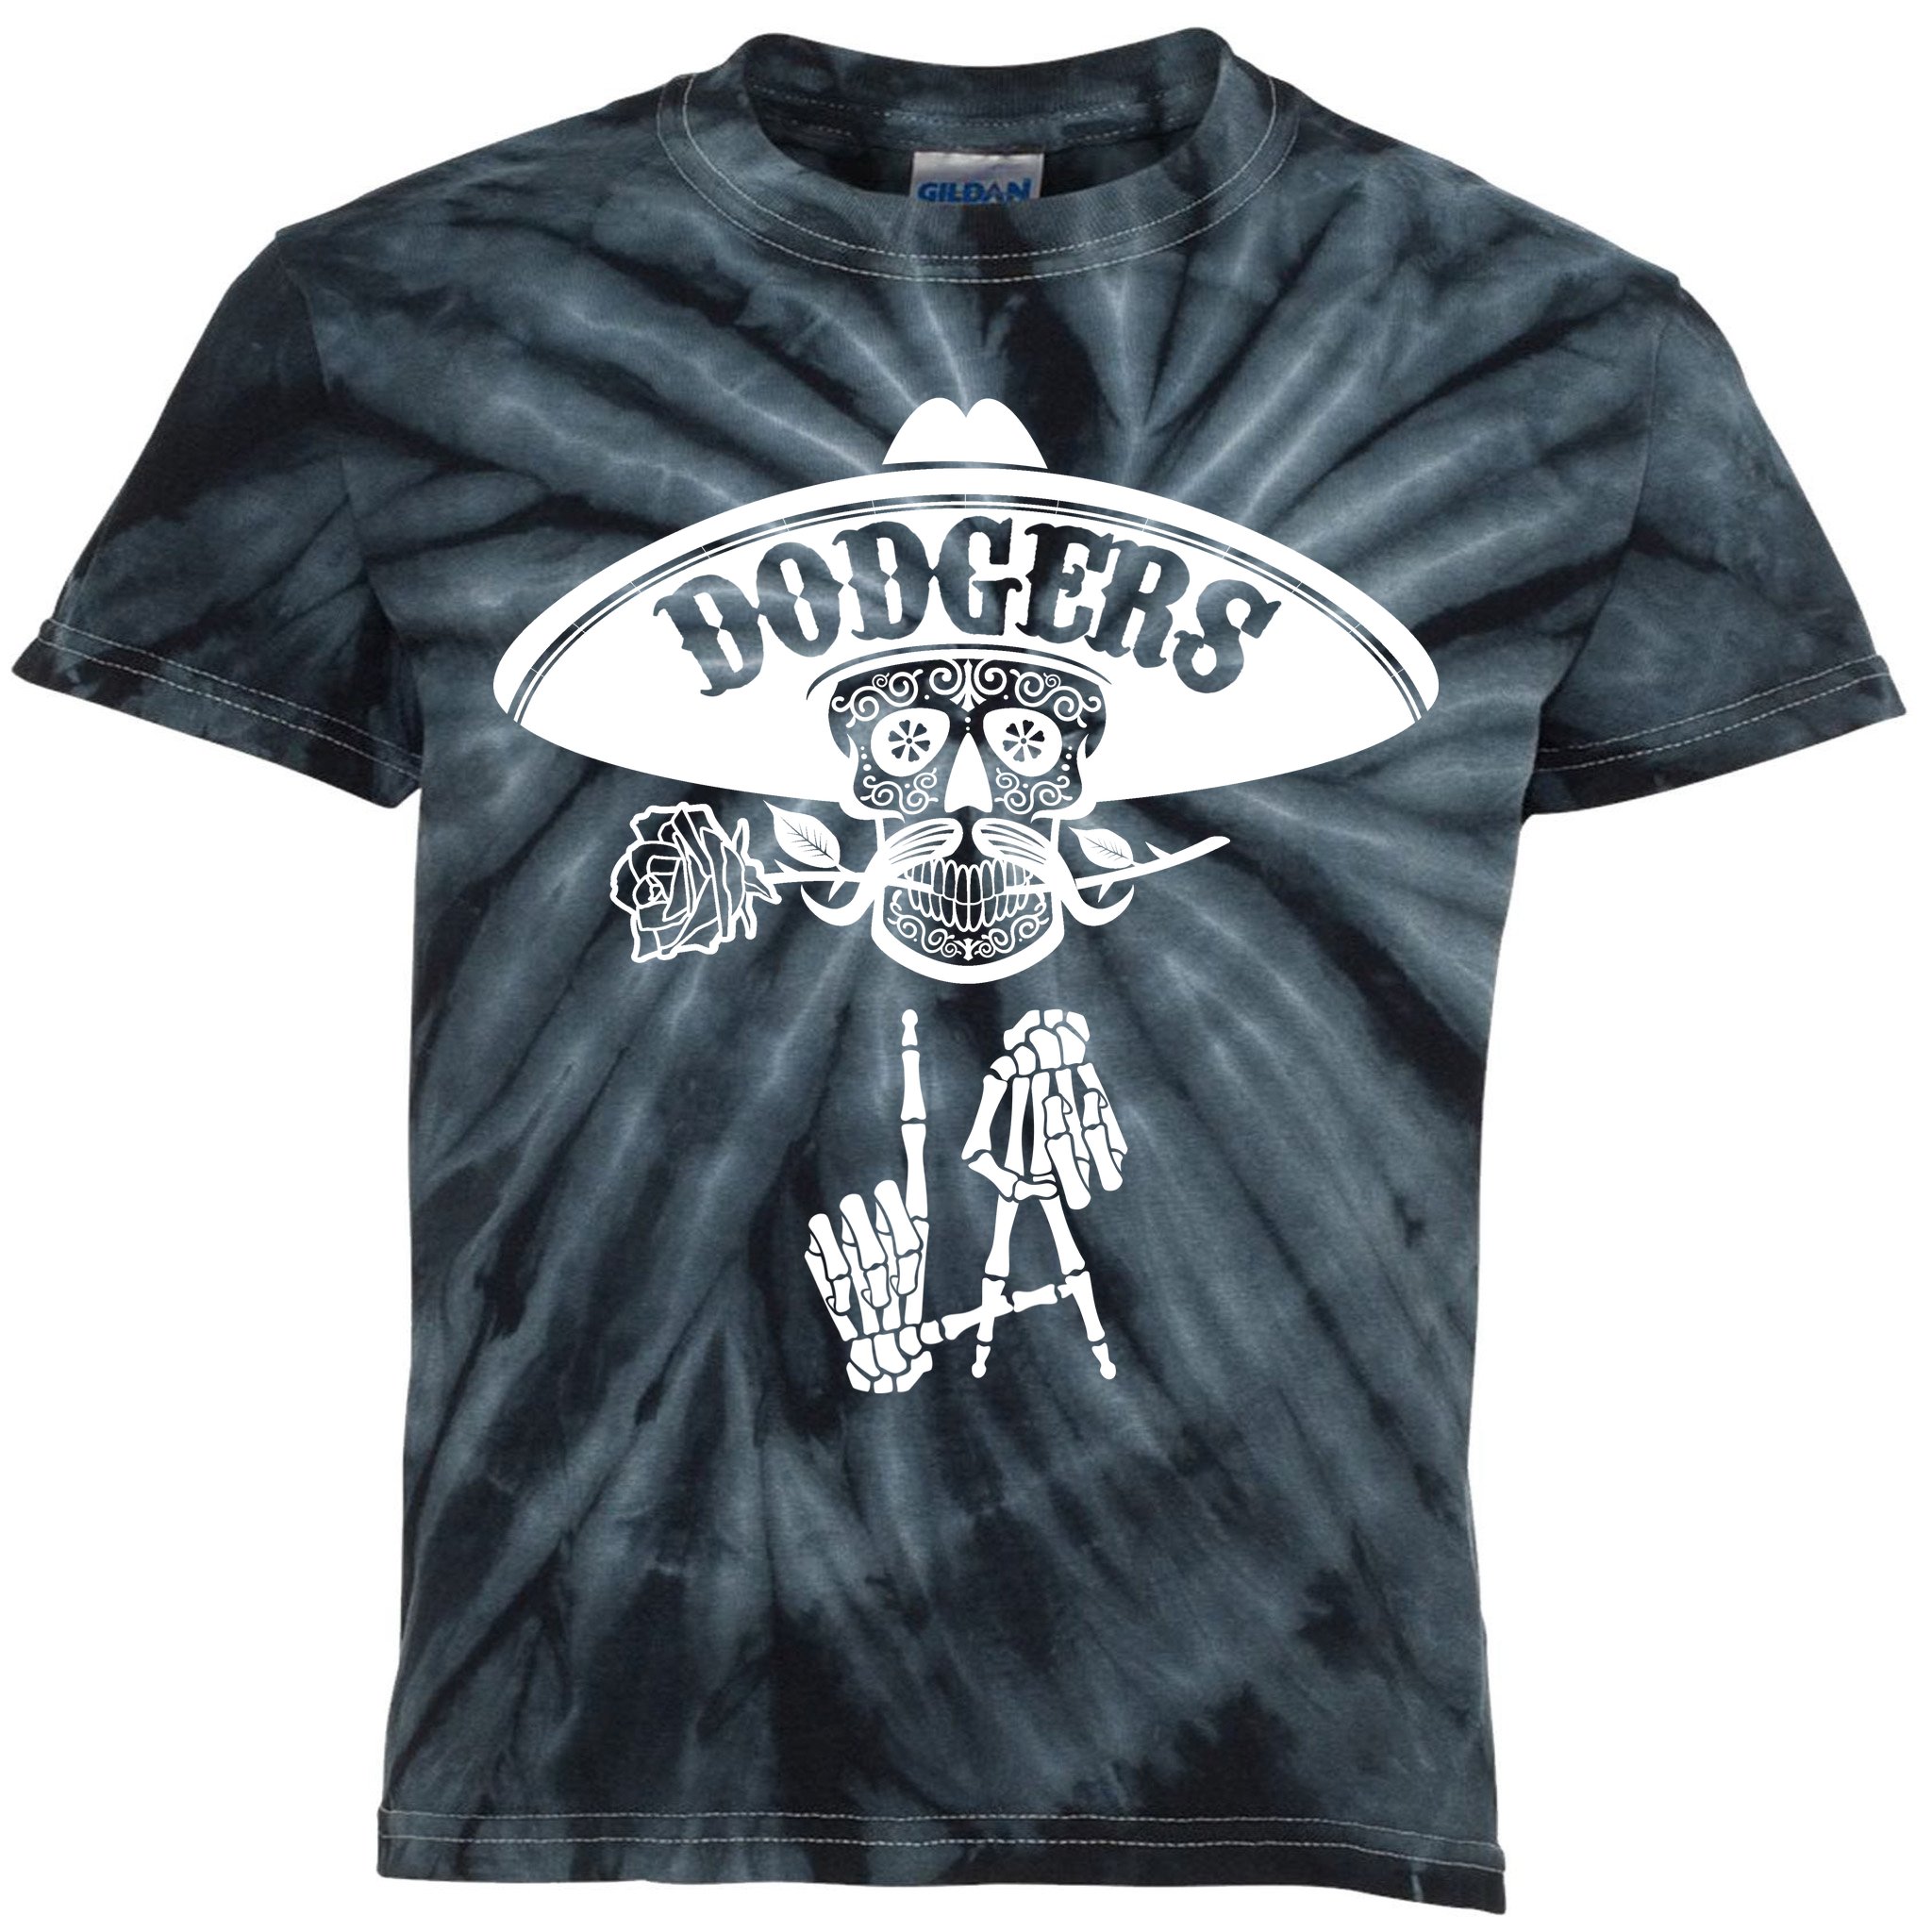 Funny Dodgers Shirts